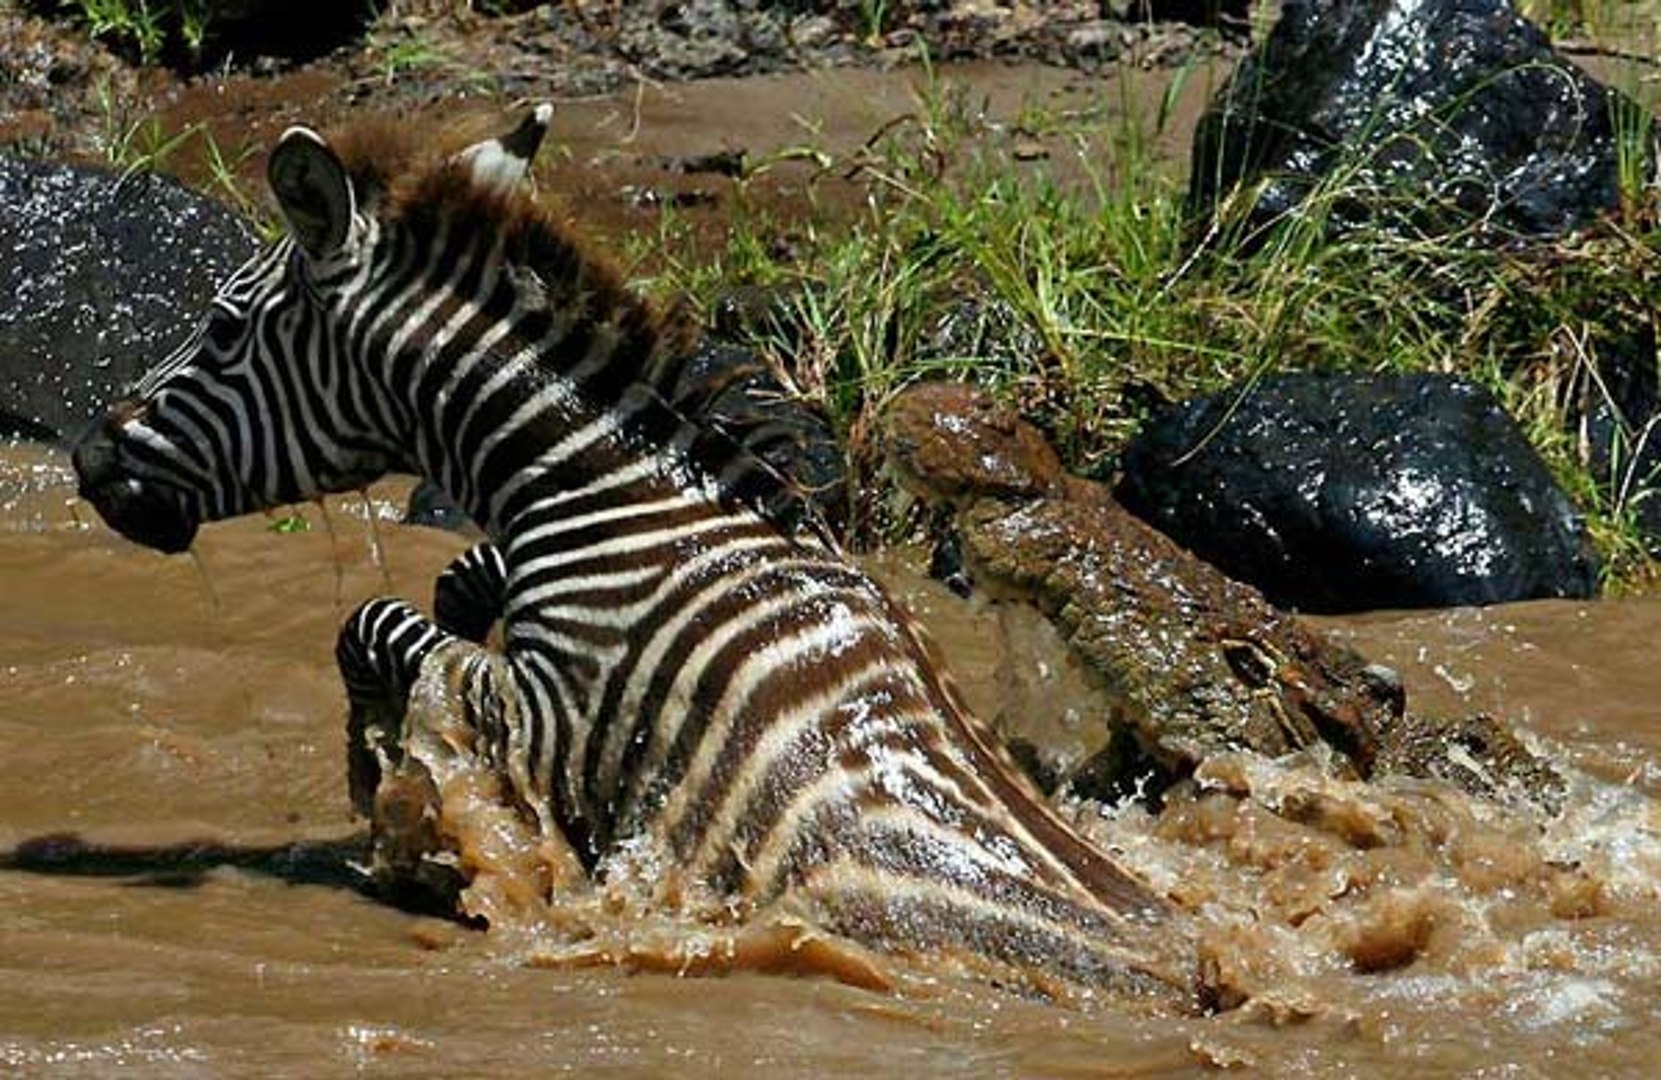 Crocodile attacks Zebra